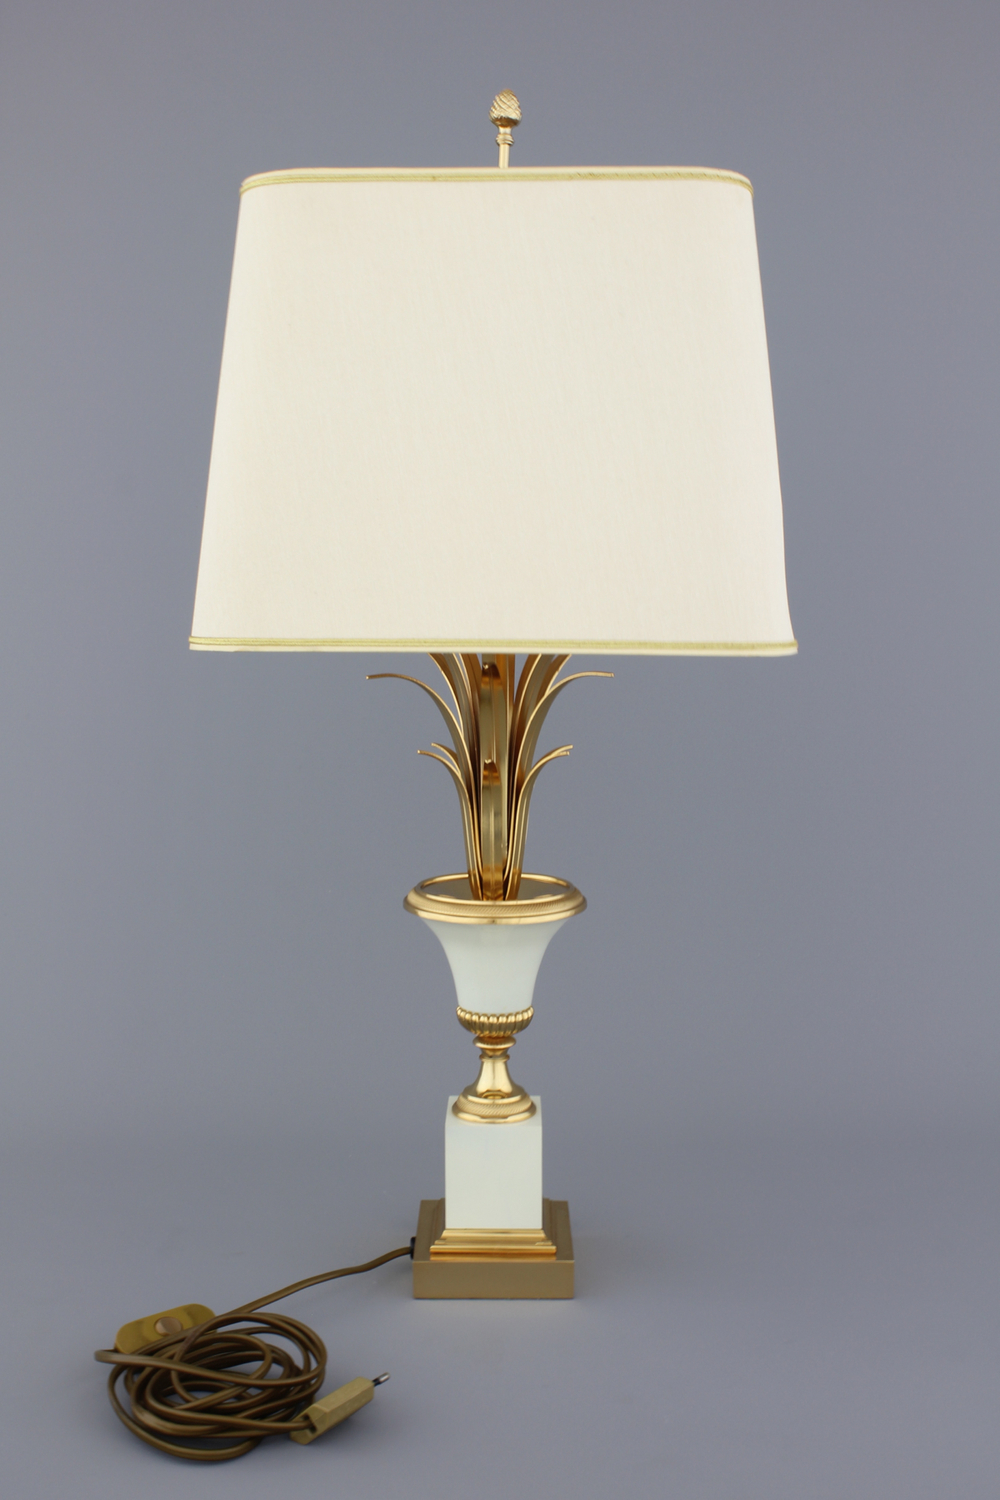 Fijne vierkantvormige lamp in Maison Charles stijl, 2e helft 20e eeuw